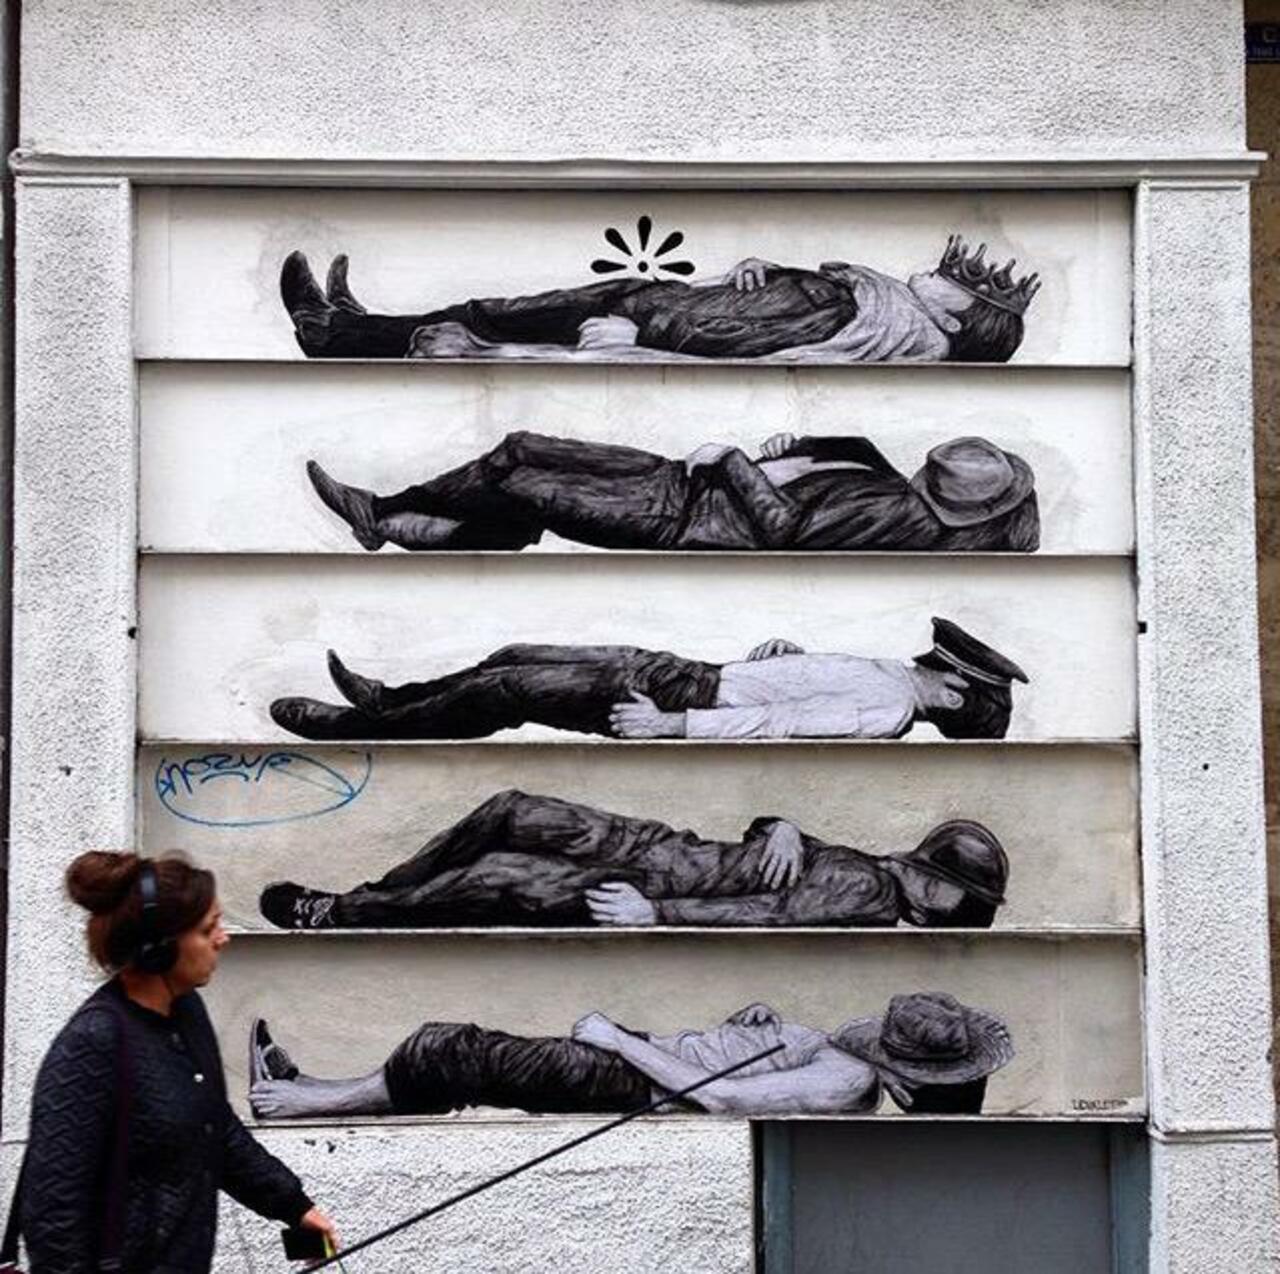 RT @GoogleStreetArt: New Street Art by Levalet 
L'ordre des choses - Paris XIX

#art #mural #graffiti #streetart http://t.co/IMFB5bkpdJ